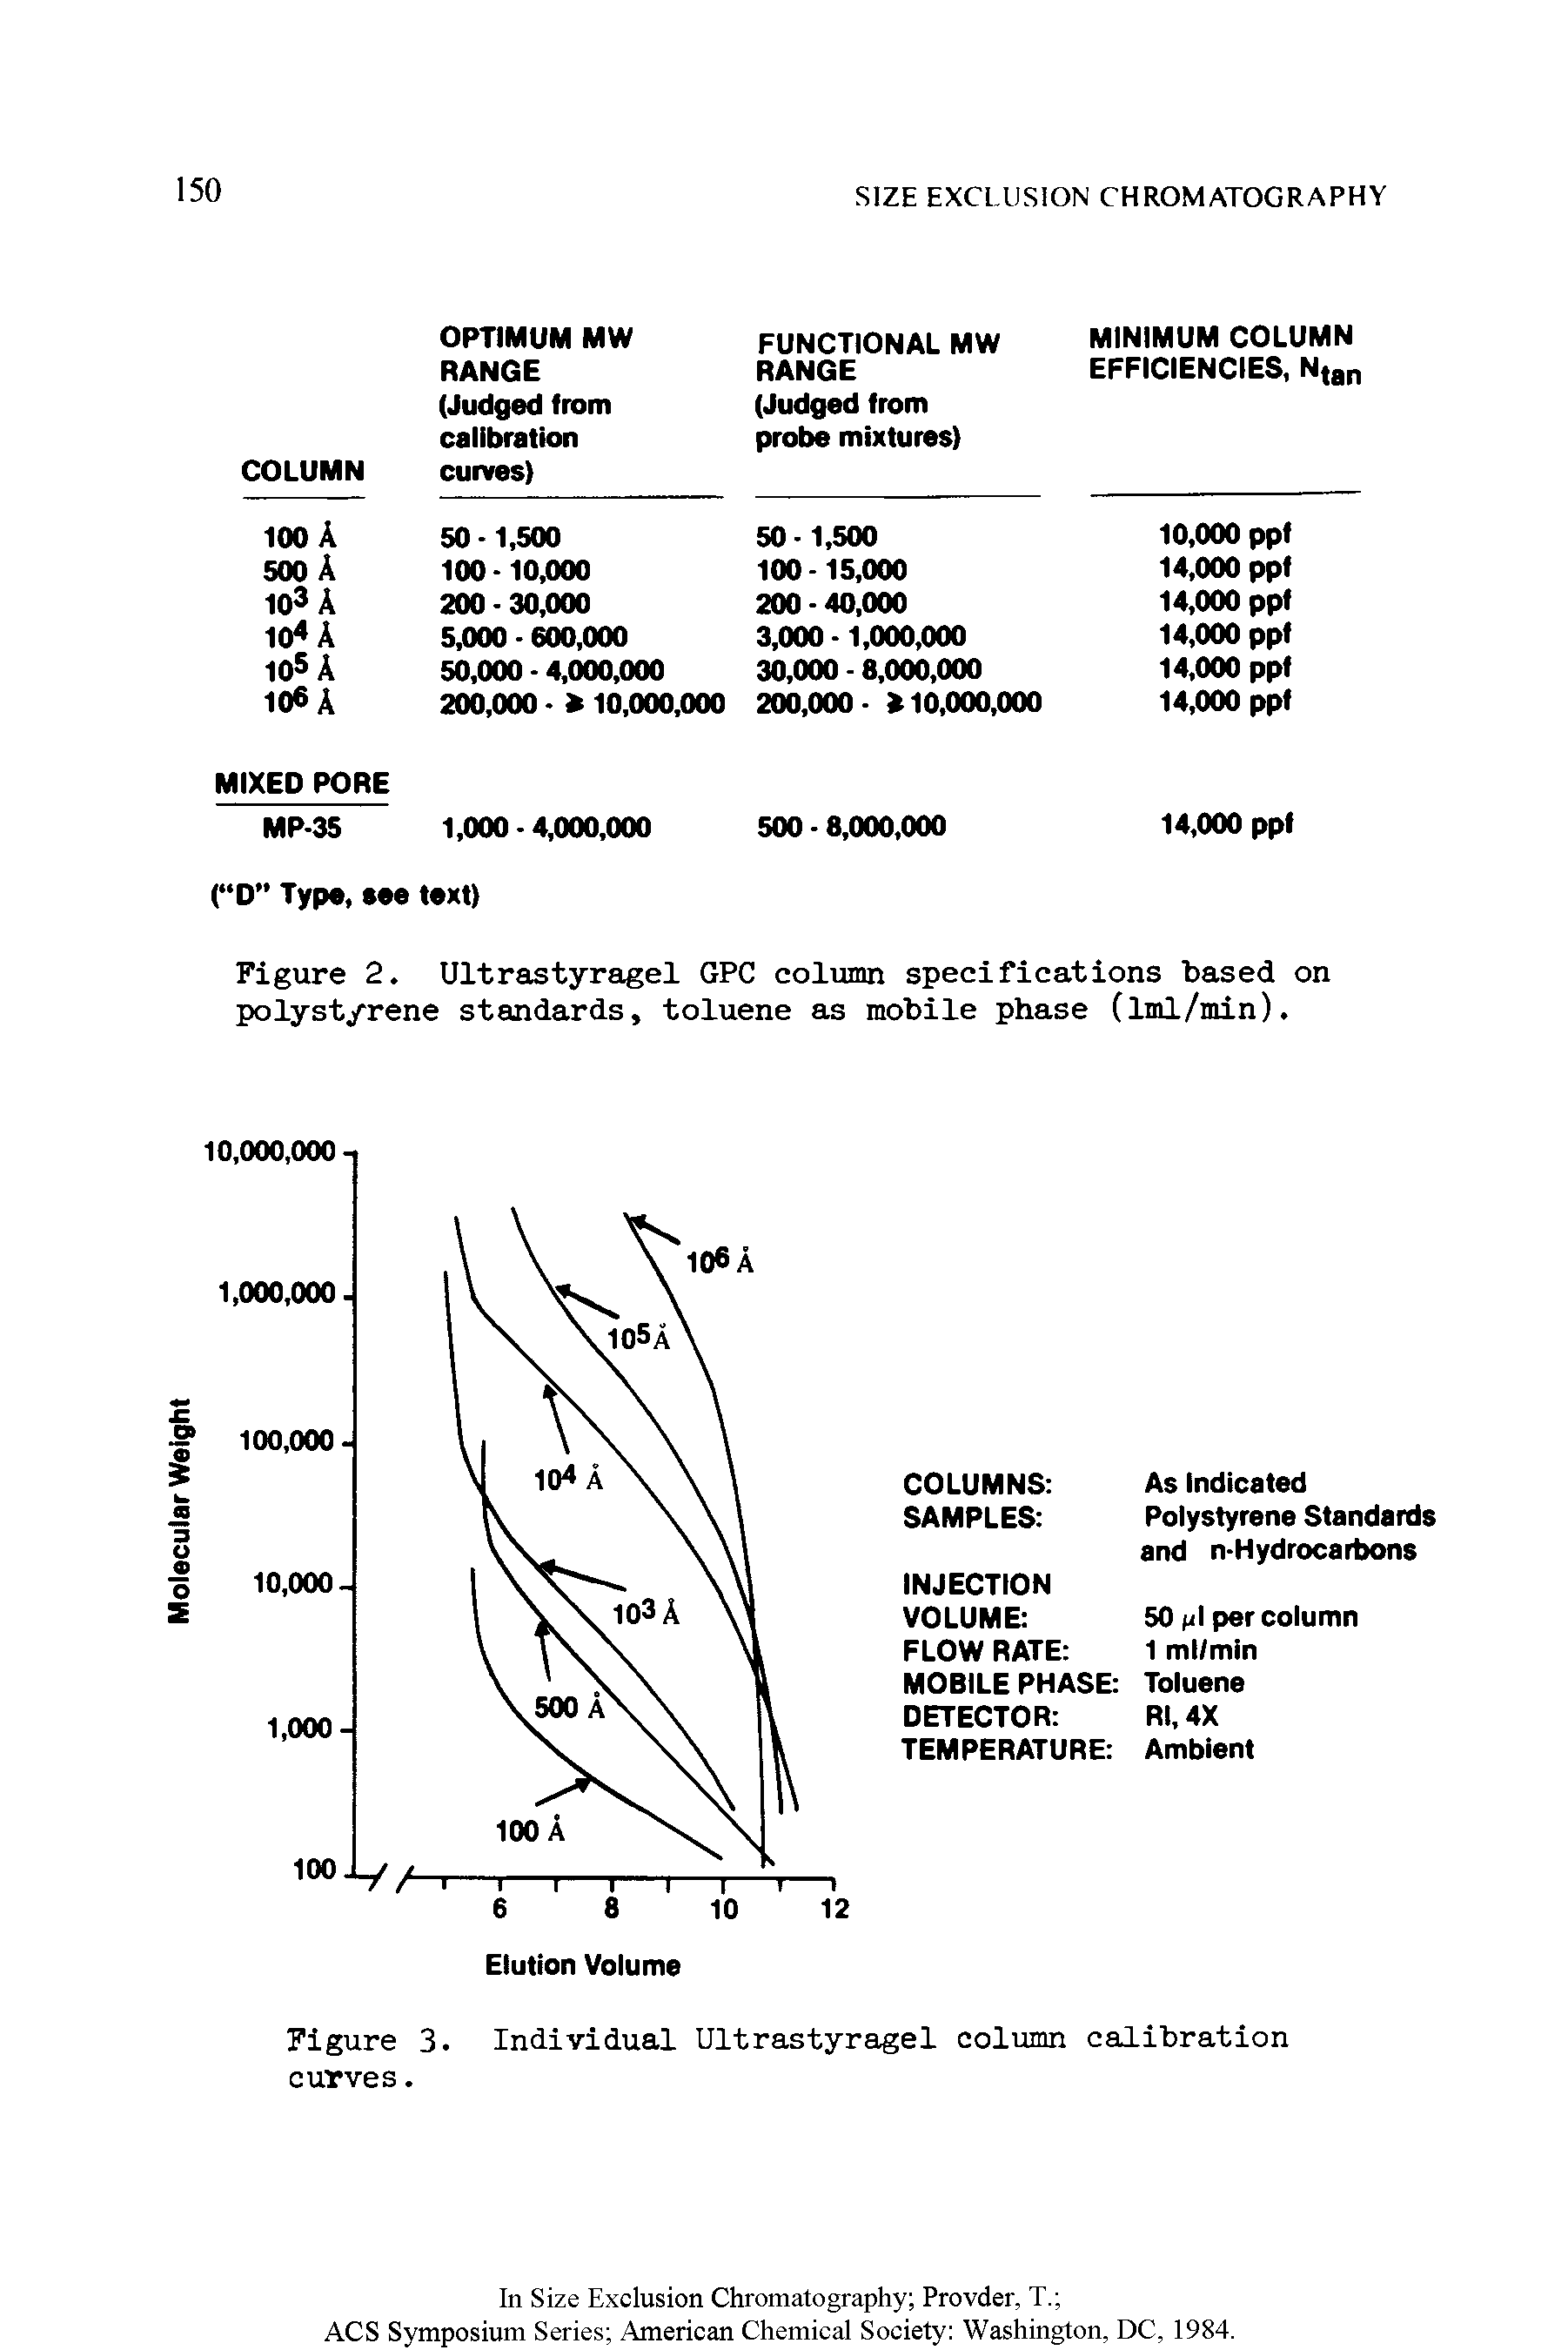 Figure 3. Individual Ultrastyragel column calibration curves.